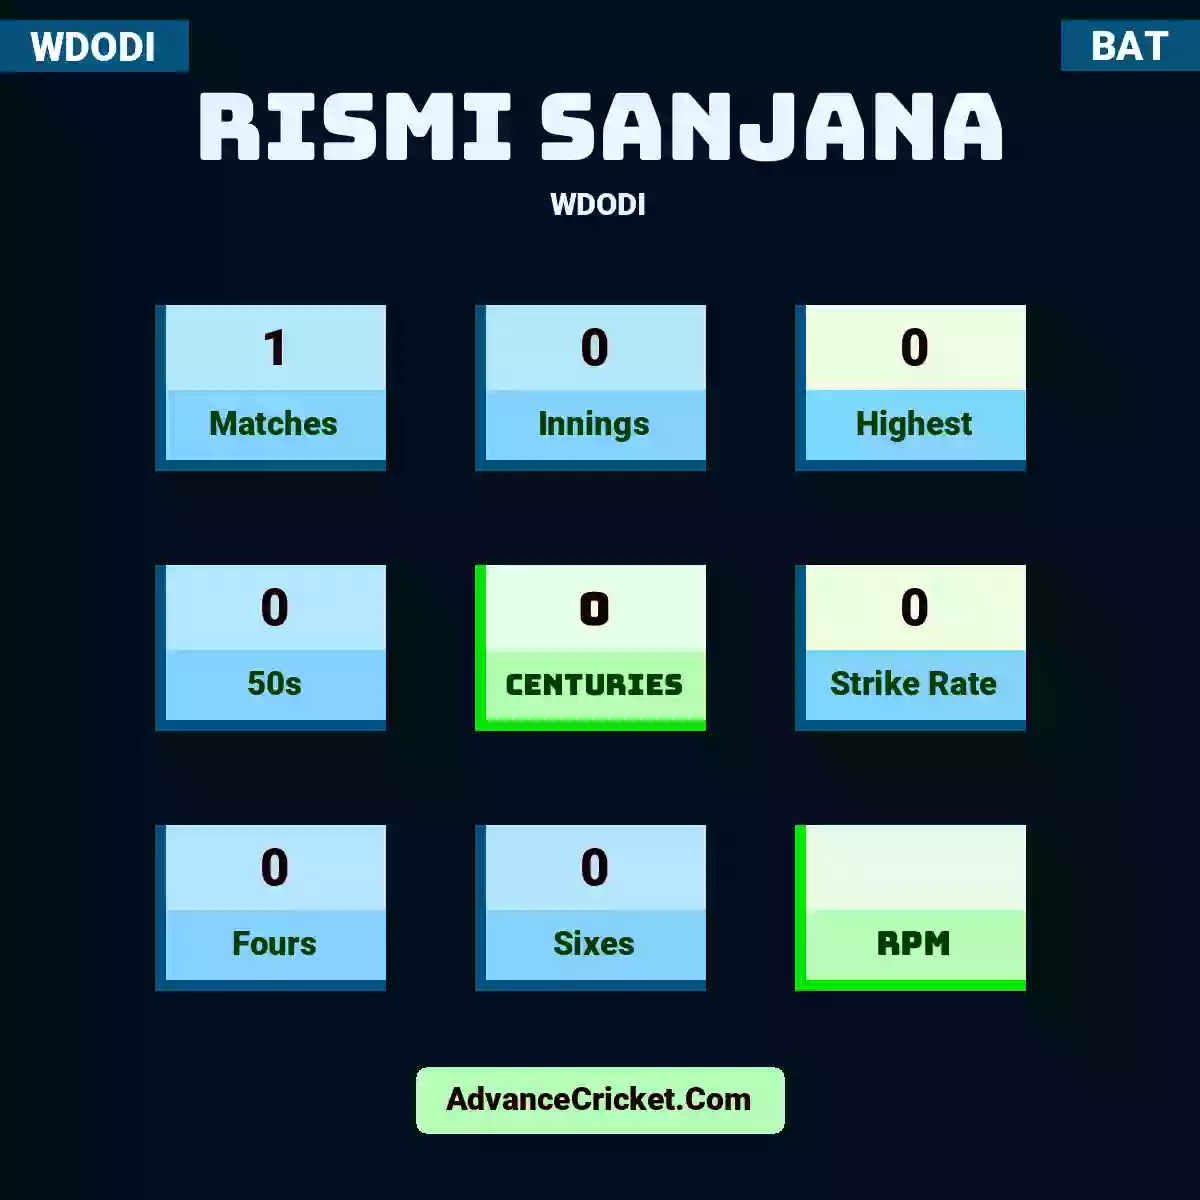 Rismi Sanjana WDODI , Rismi Sanjana played 1 matches, scored 0 runs as highest, 0 half-centuries, and 0 centuries, with a strike rate of 0. R.Sanjana hit 0 fours and 0 sixes.